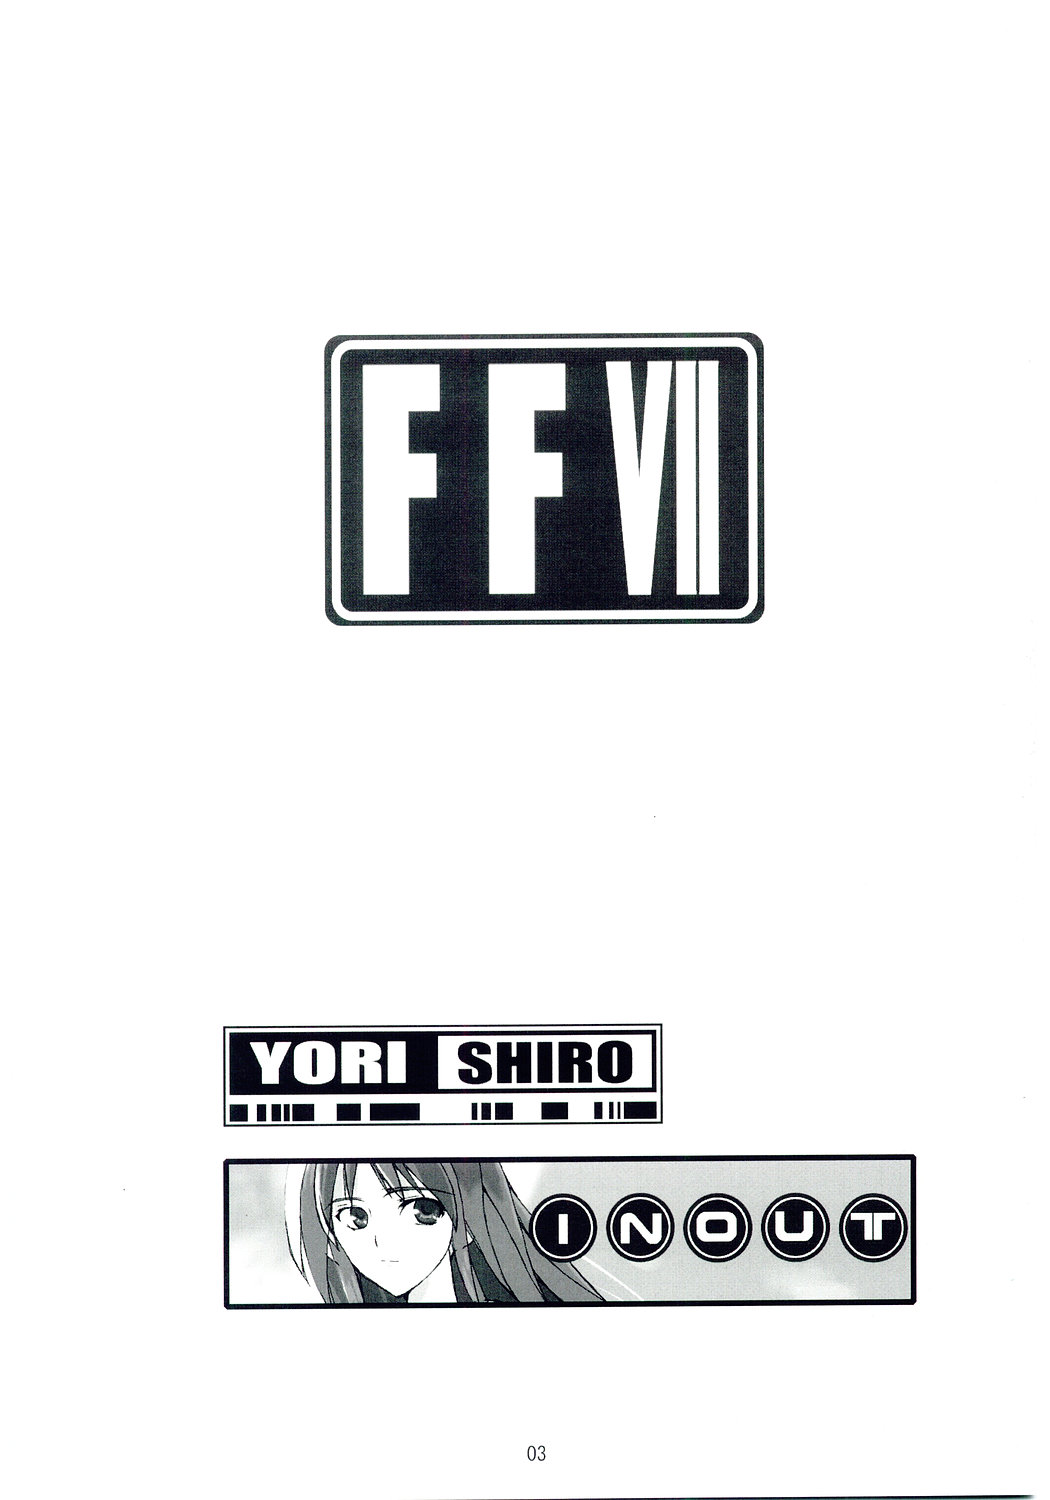 [Inout] Tifa&#039;s Nightmare (Final Fantasy VII) 